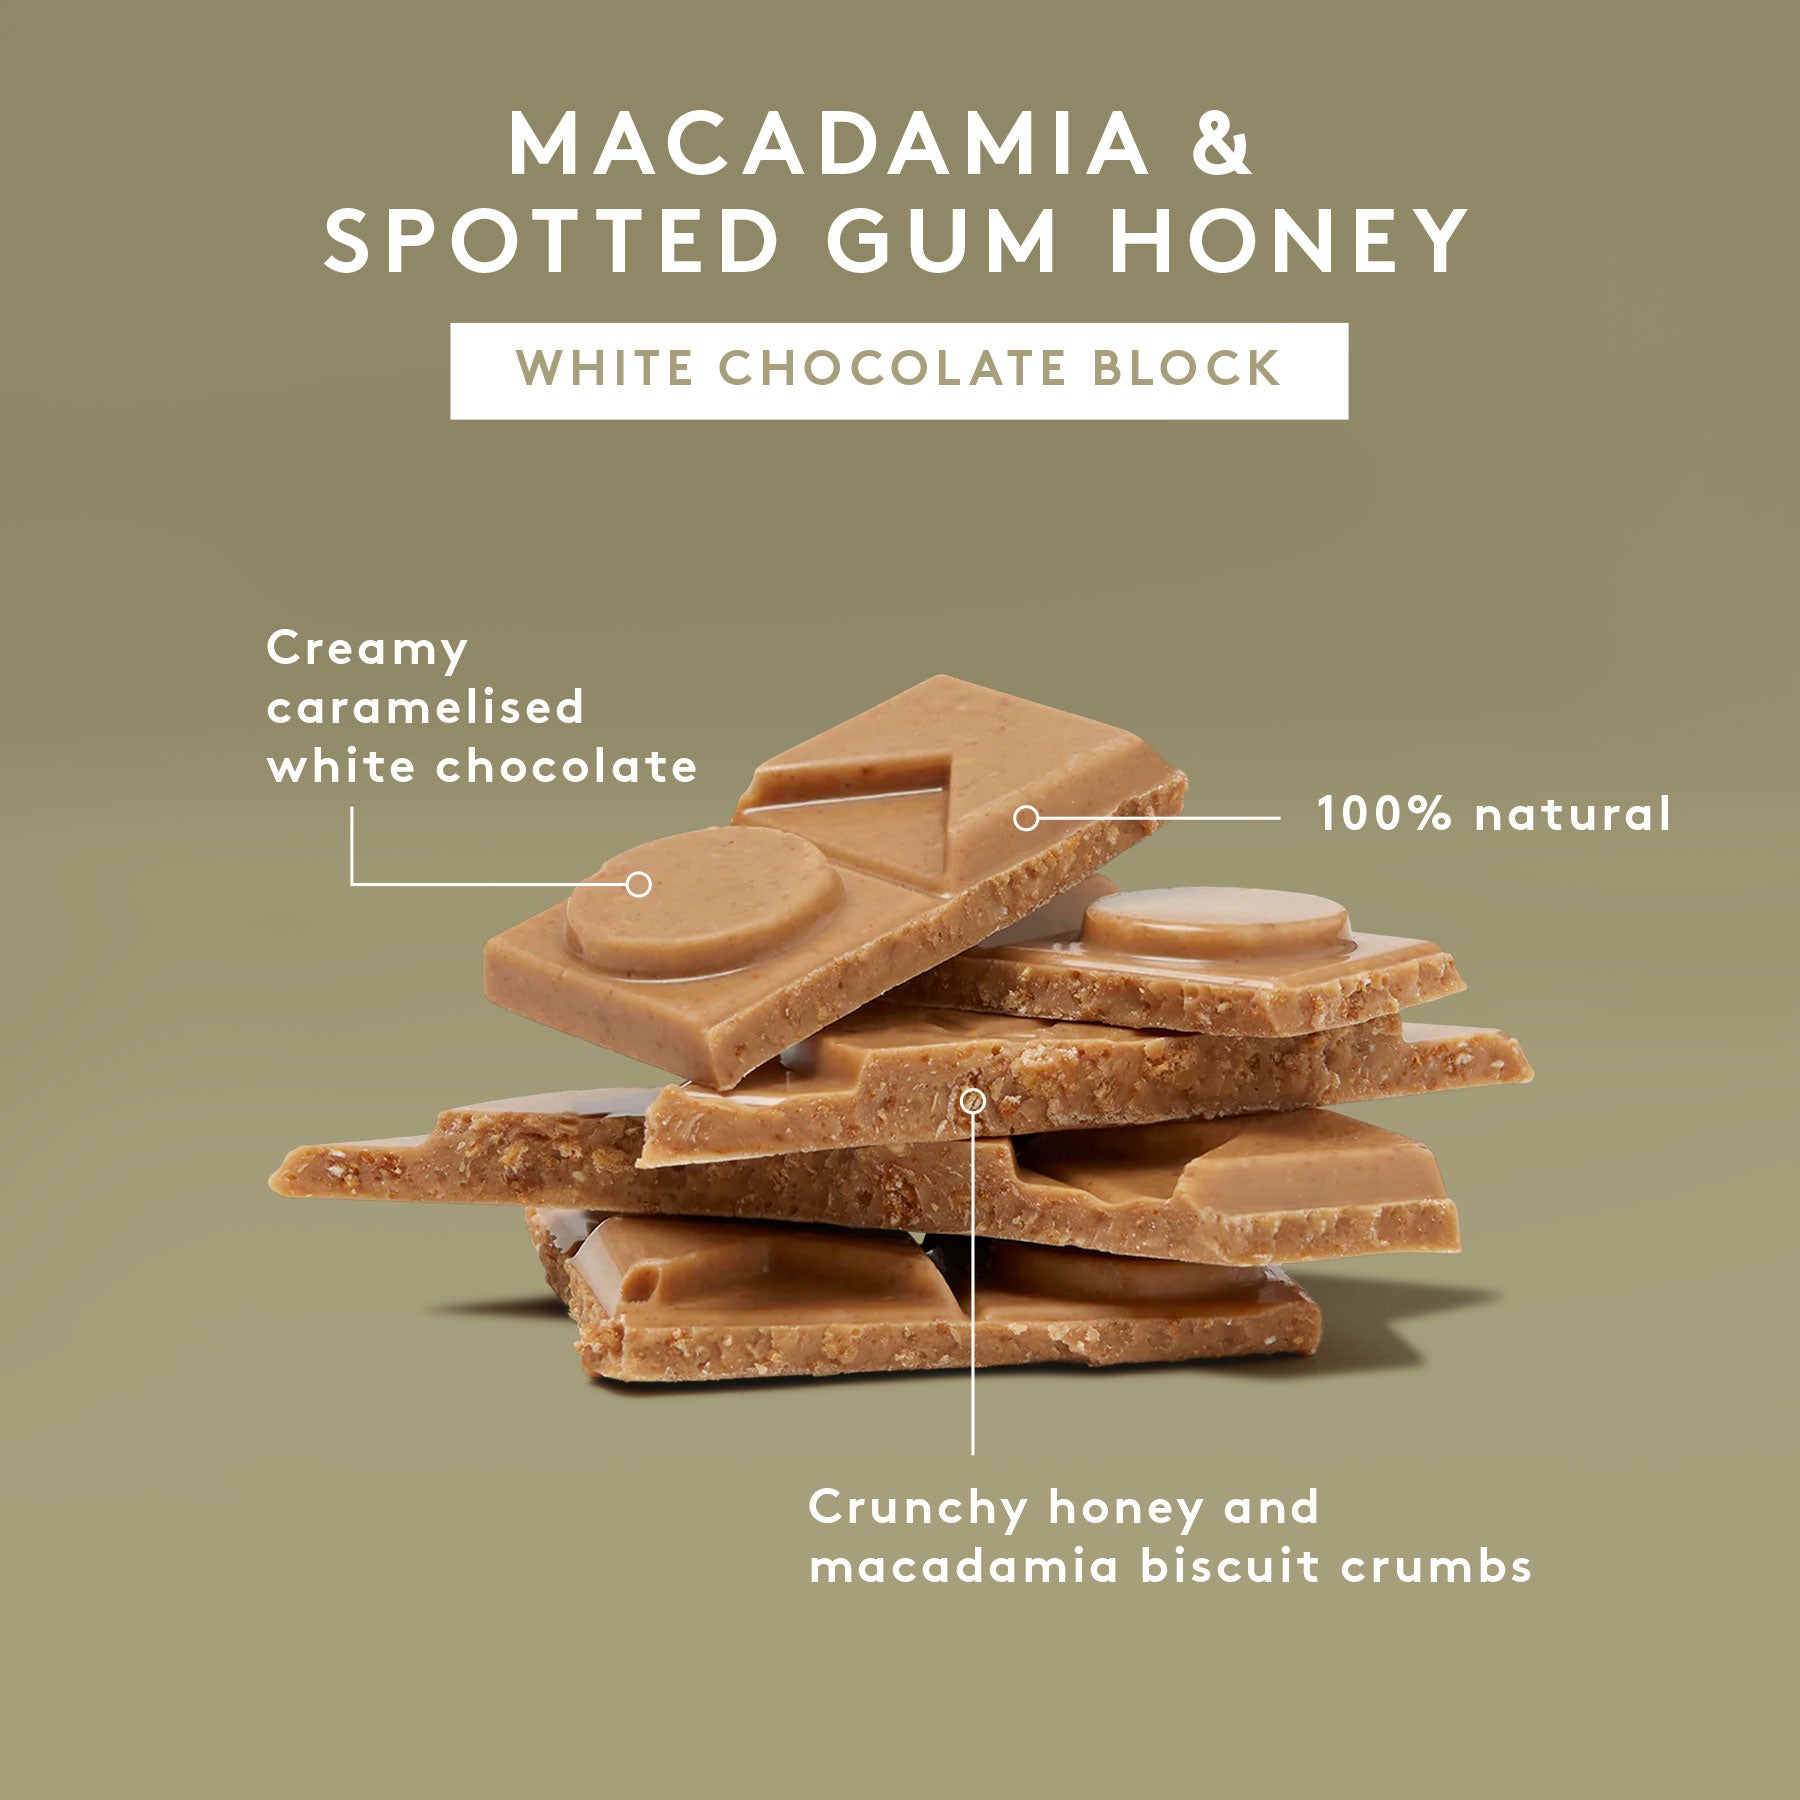 Macadamia & Spotted Gum Honey | Caramelised White Chocolate Block